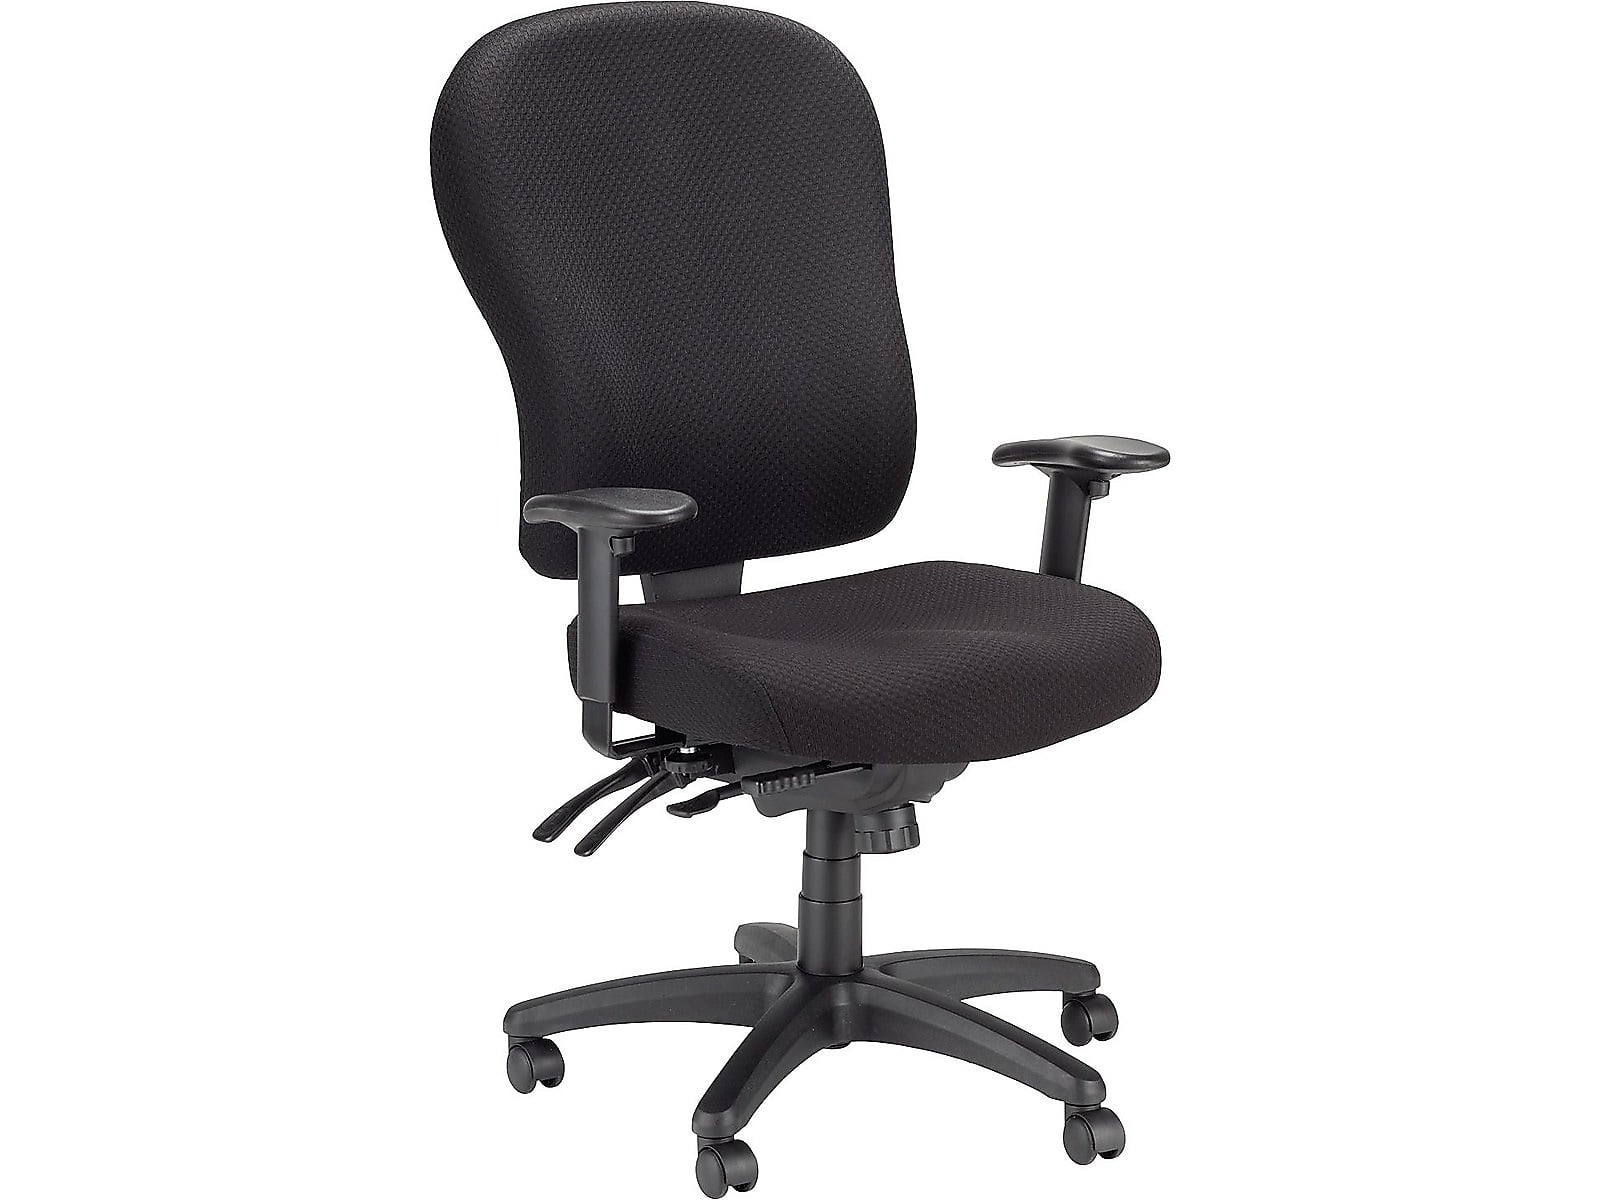 Tempur-pedic Office Chair Manual